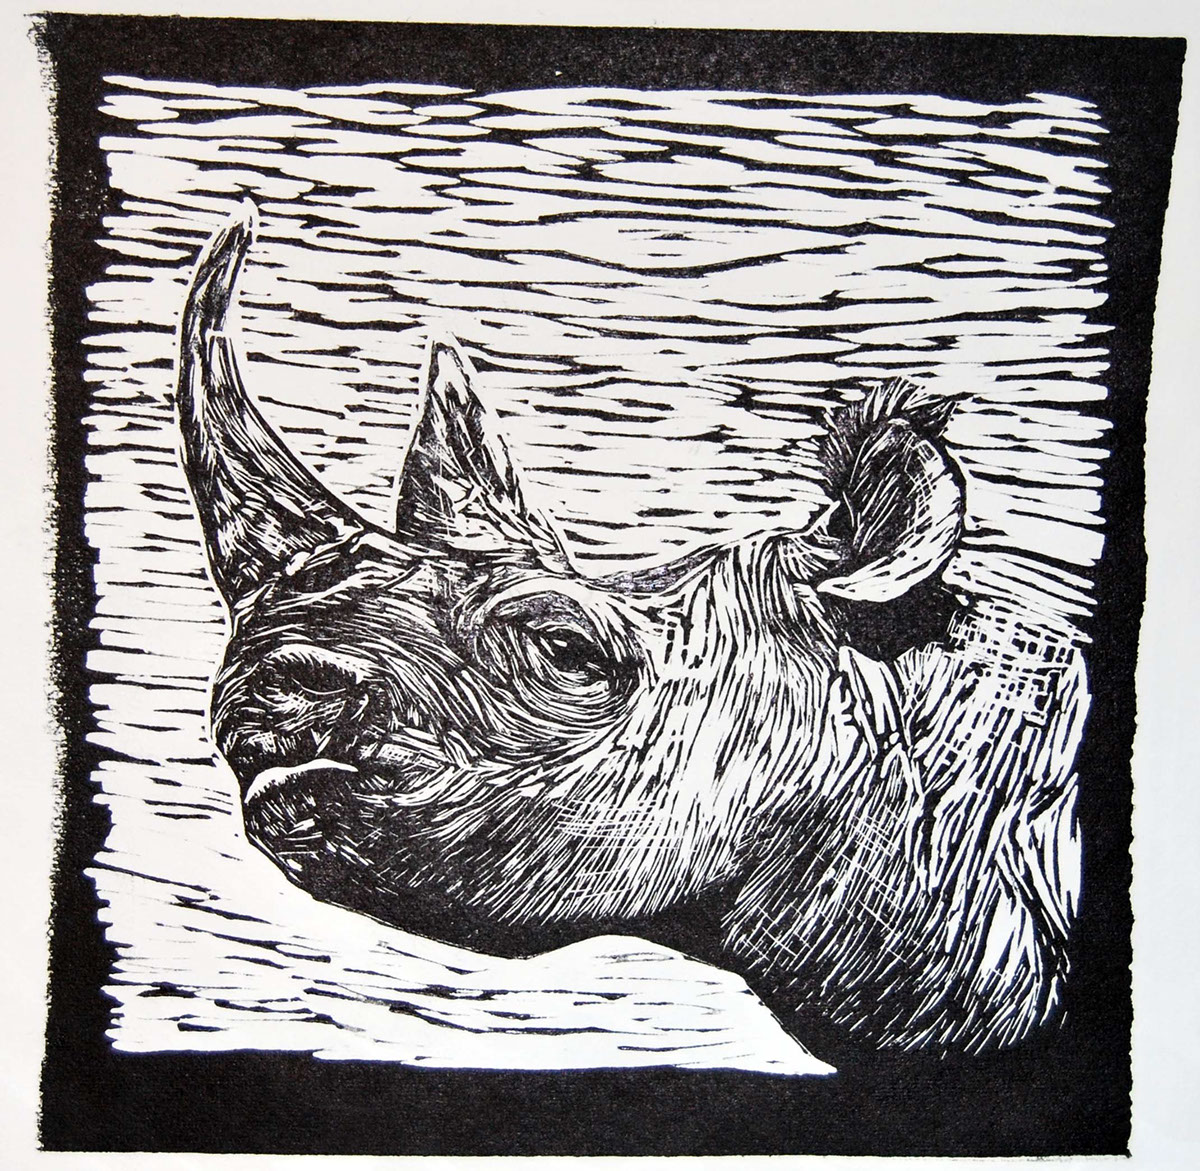 linocut relief printing Rhino poaching activism black and white